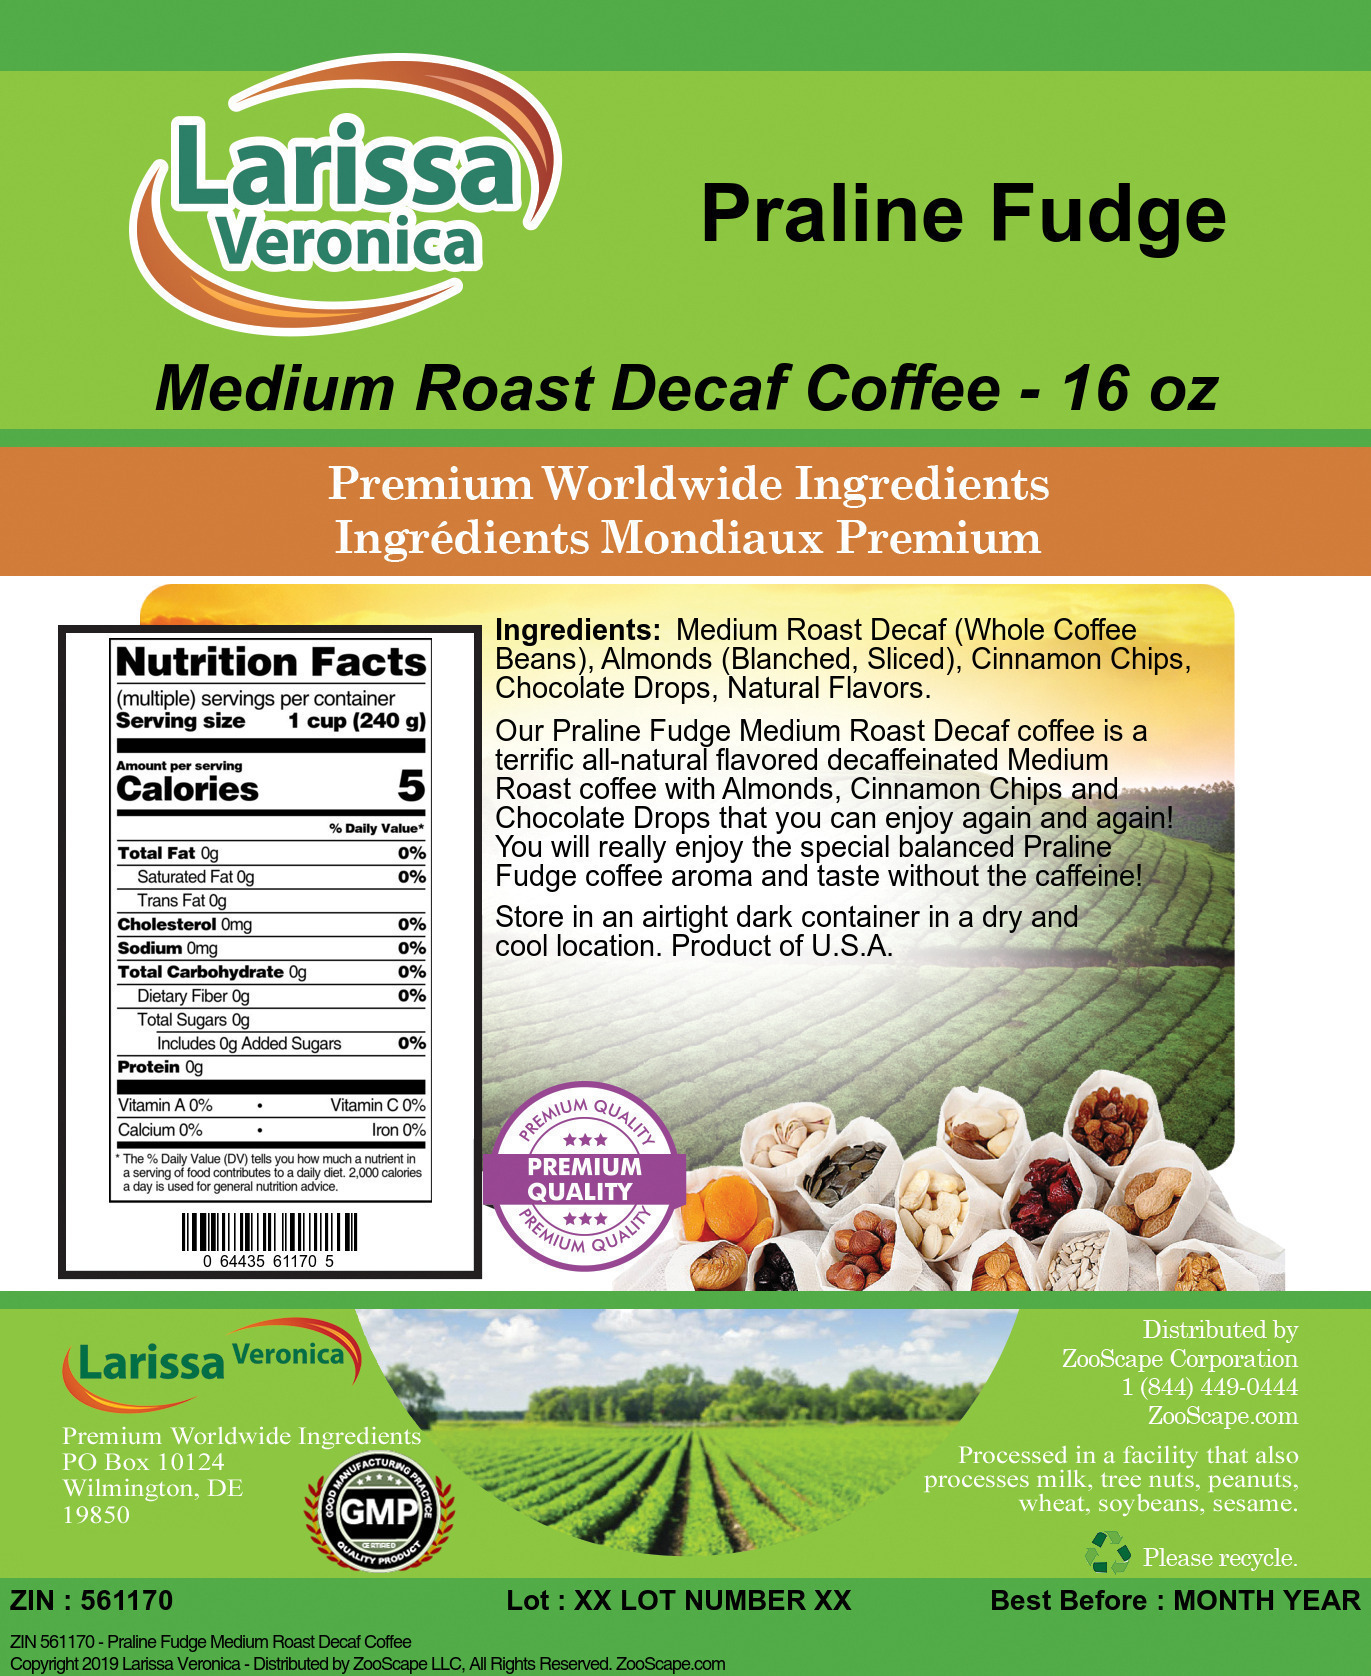 Praline Fudge Medium Roast Decaf Coffee - Label